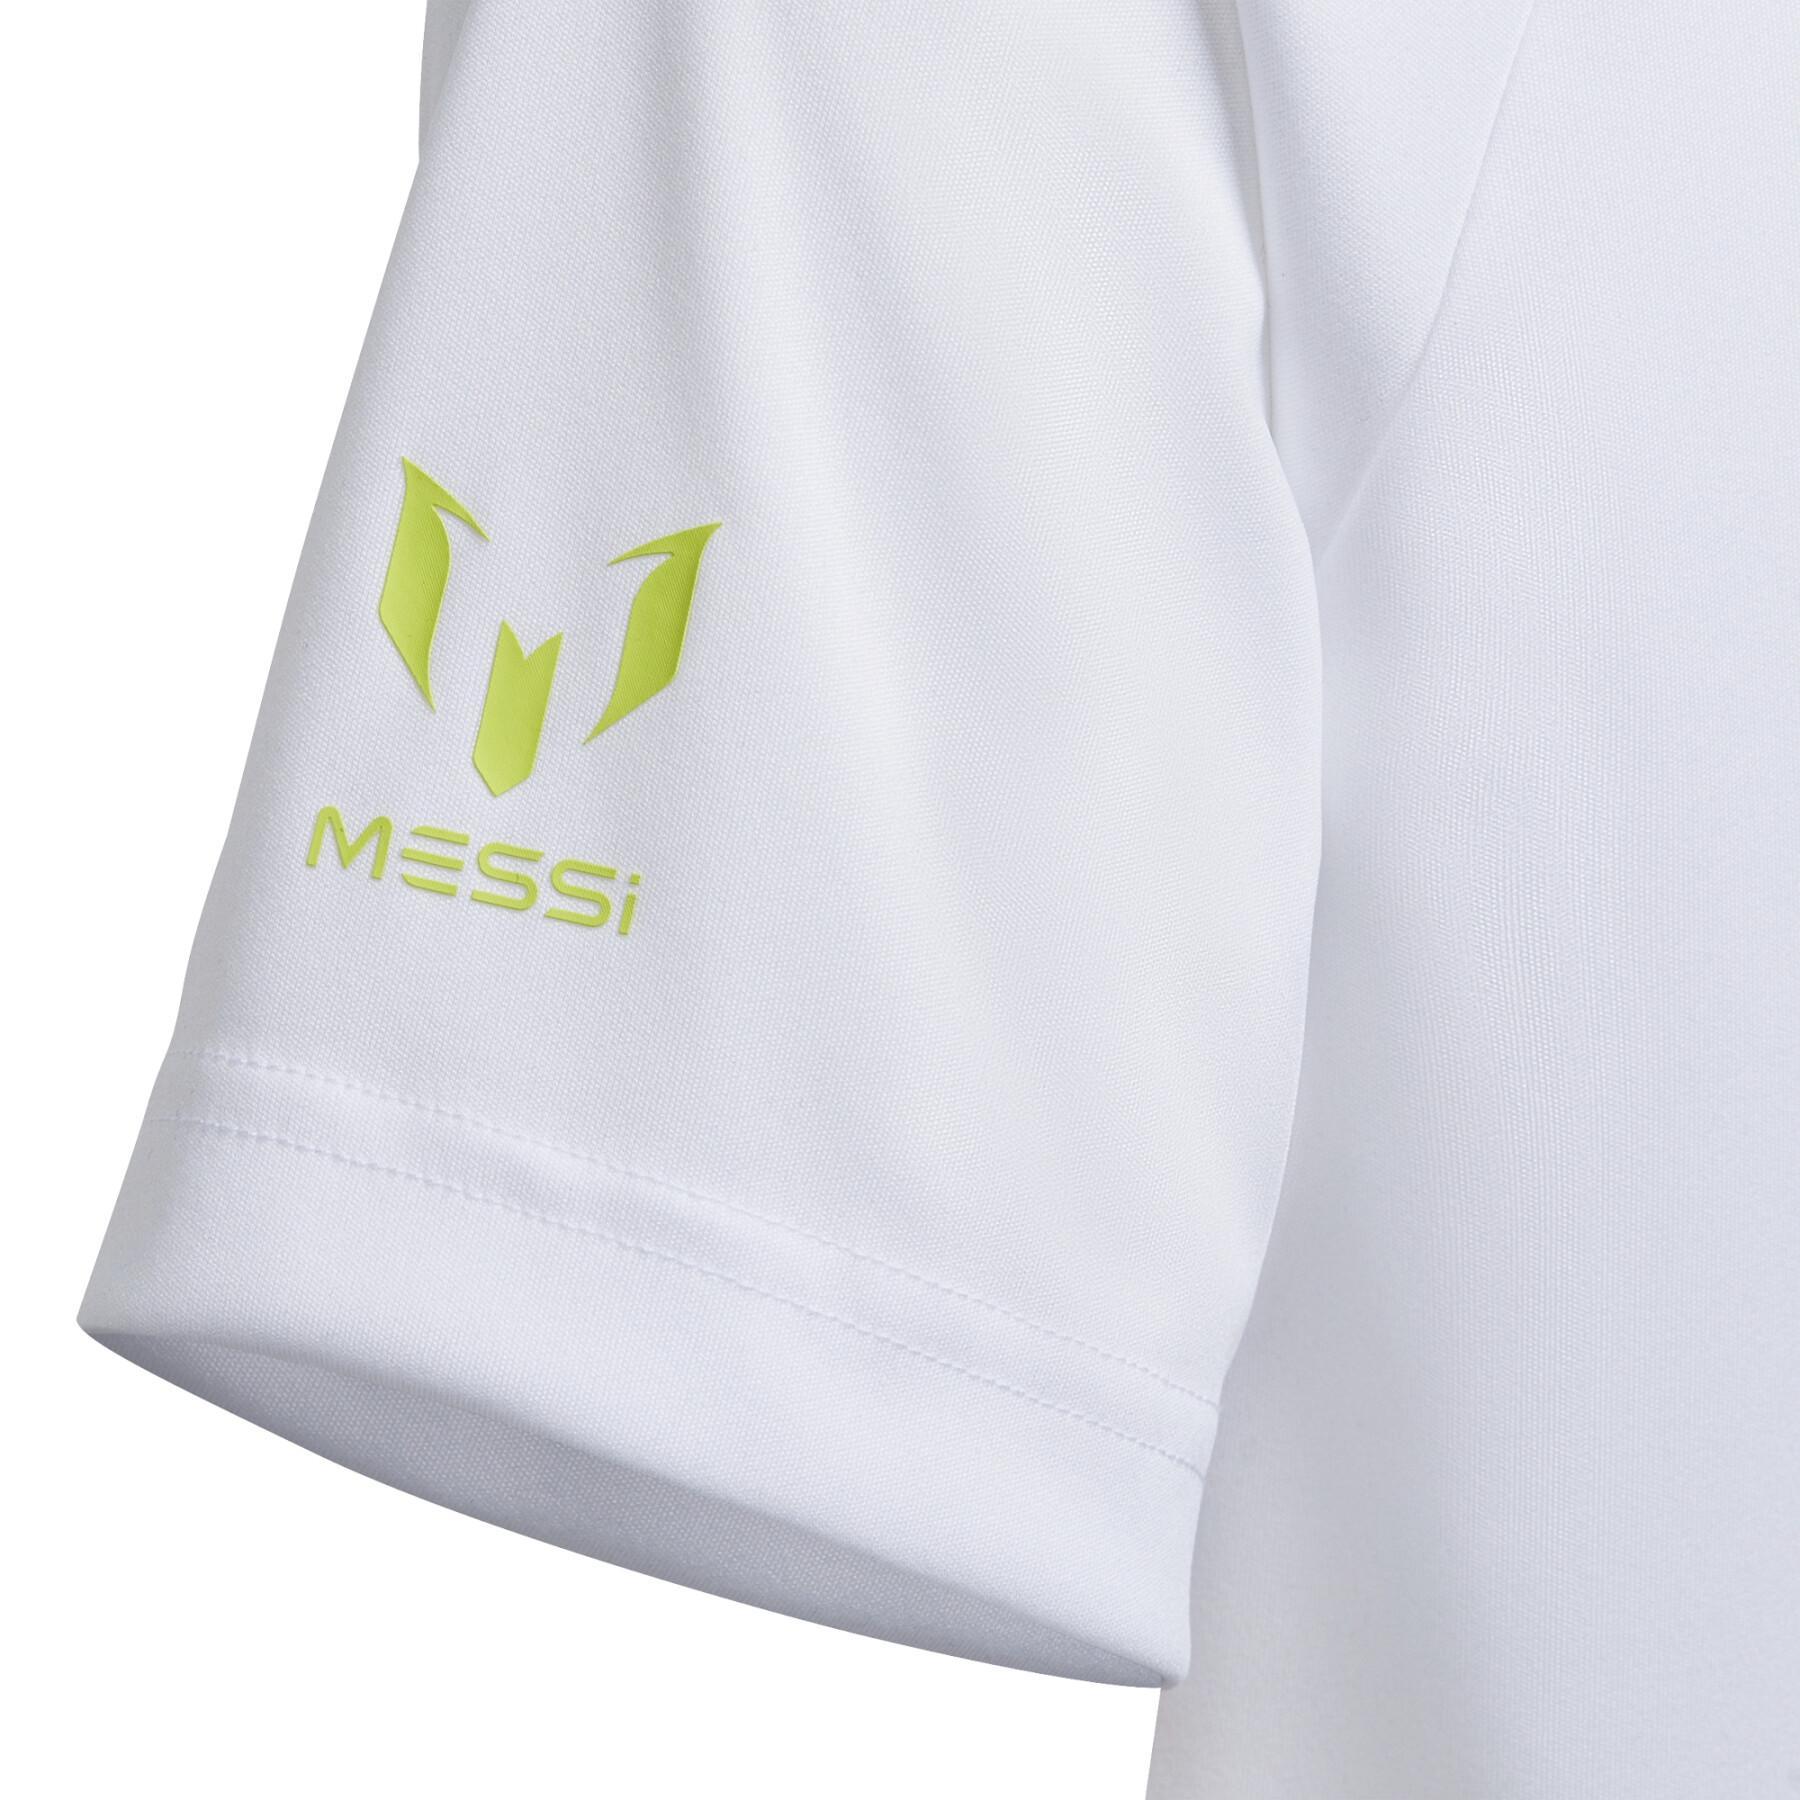 Trainingsanzug für Kinder adidas Messi Football-Inspired Summer